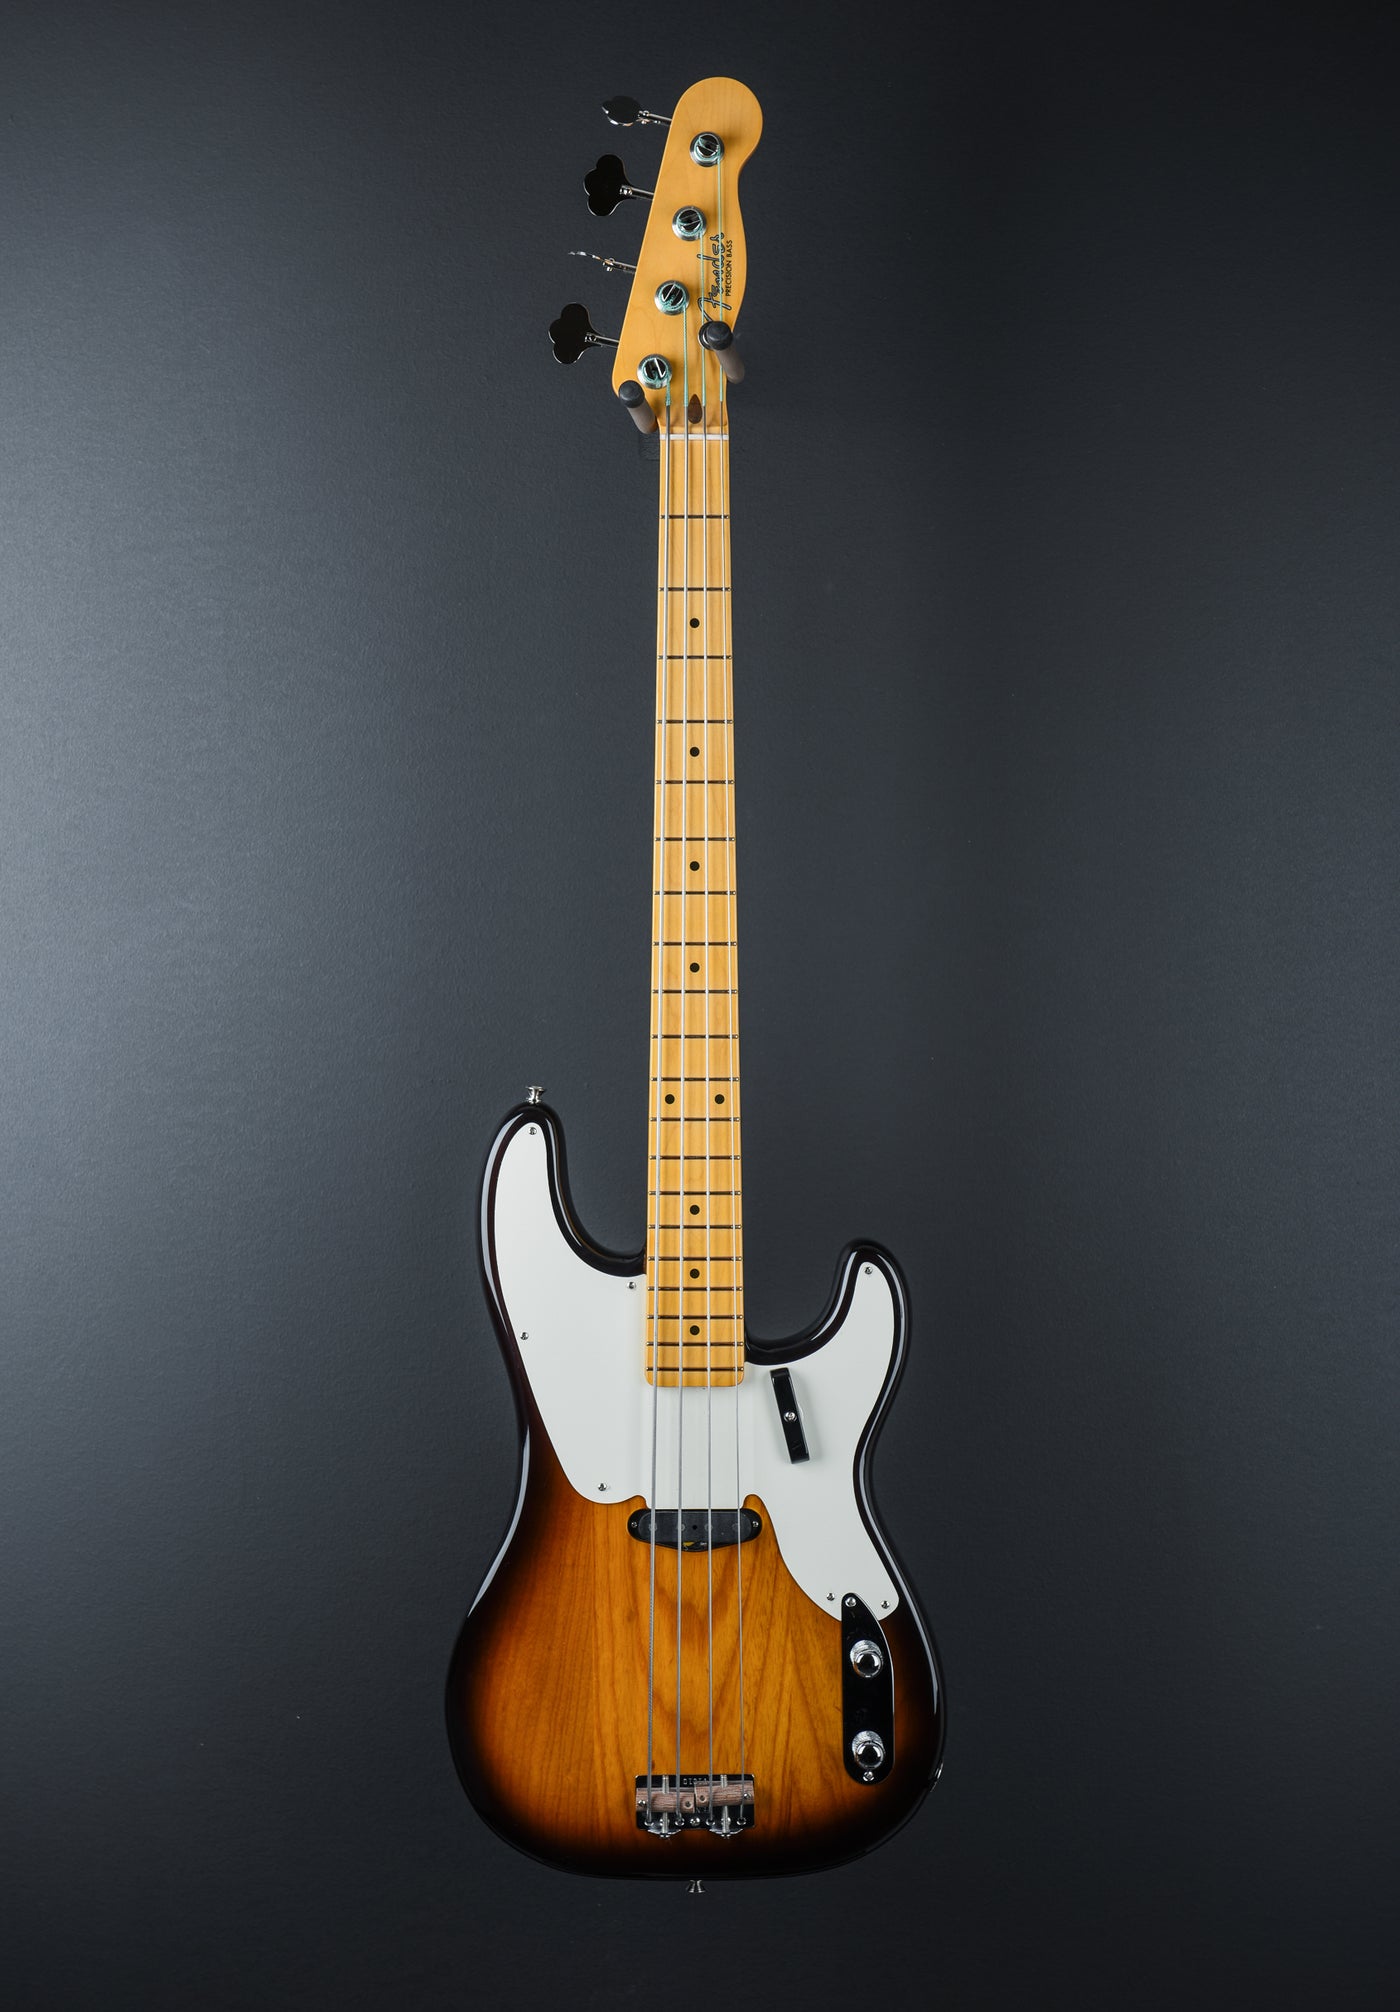 American Vintage II 1954 Precision Bass - Vintage Blonde